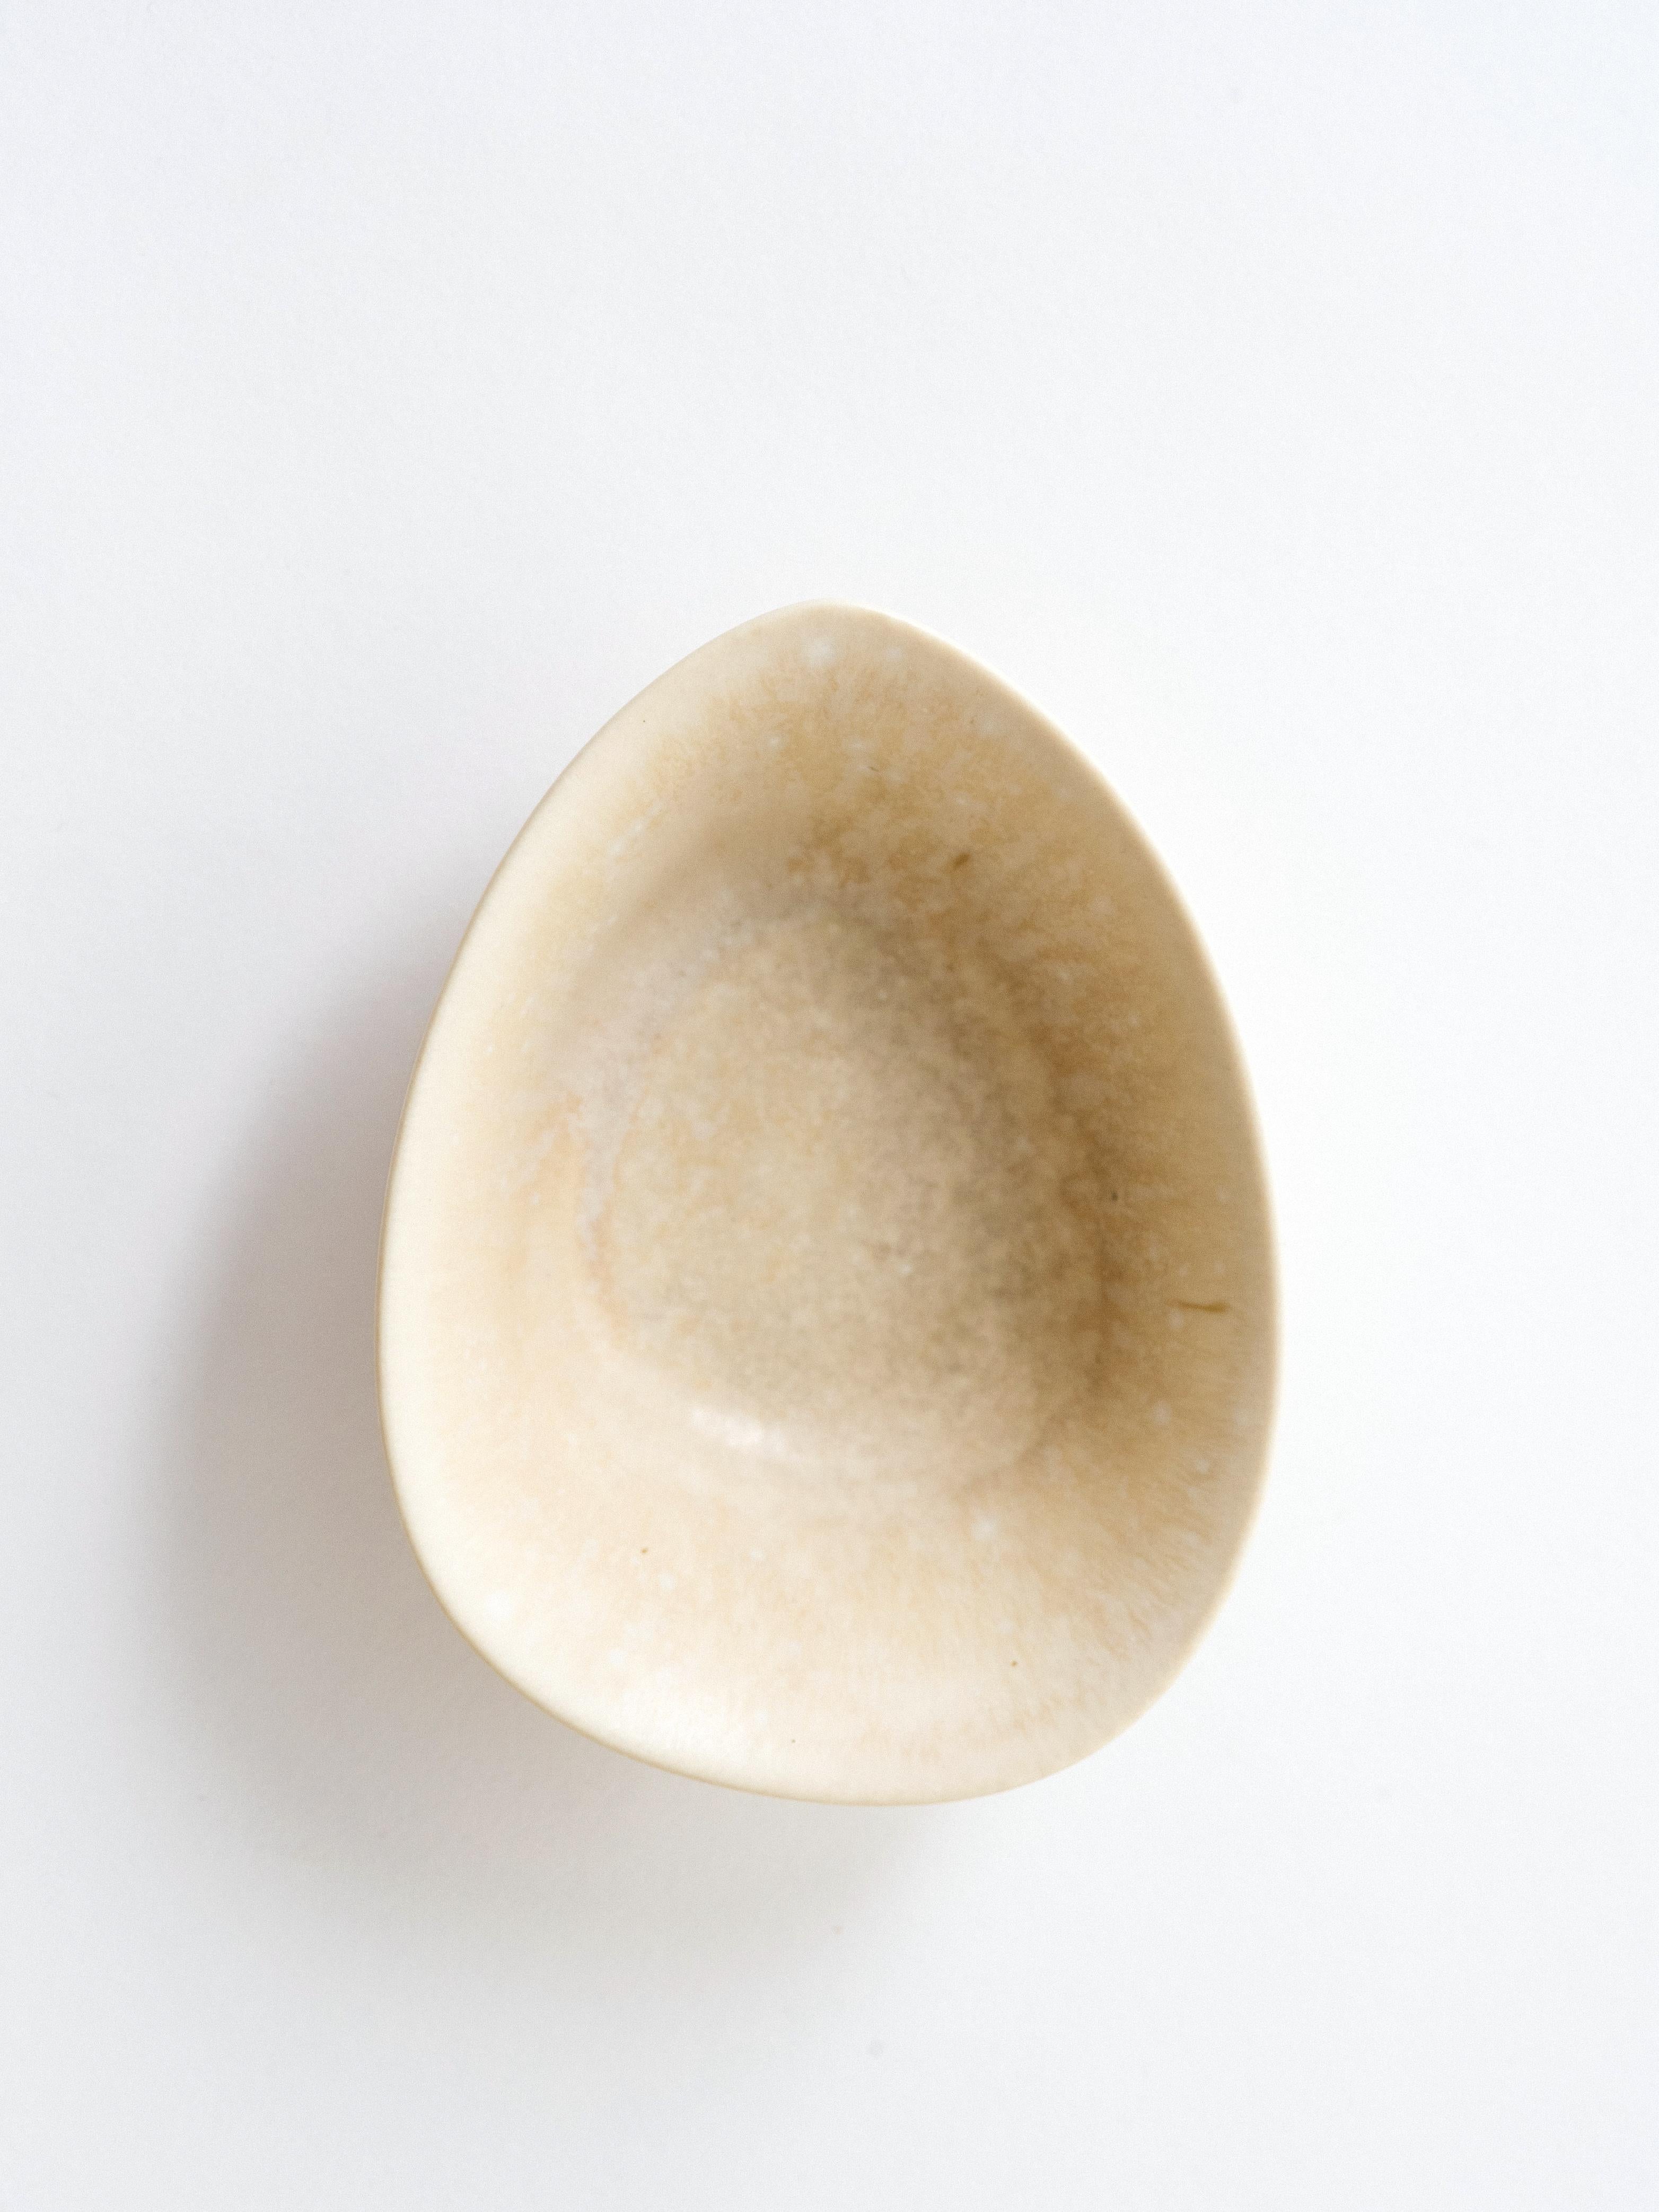 Modern Gunnar Nylund Petite Teardrop Ceramic Bowl in Latte Glaze for Rorstrand